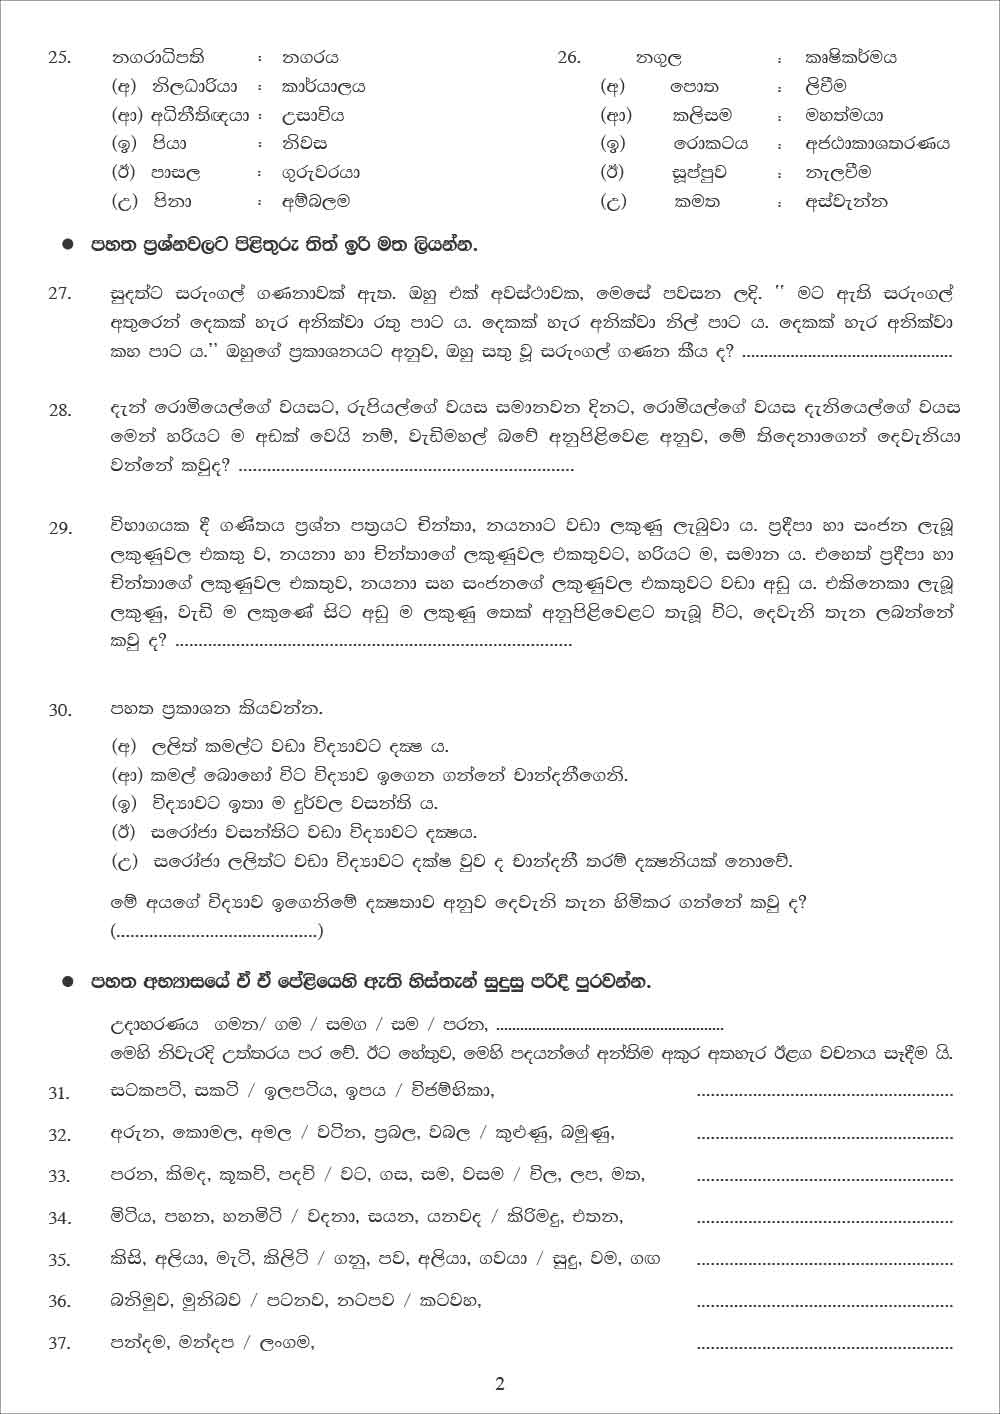 SLAS Pass Paper 01 by Anusha Gokula - General Knowledge in Sinhala 